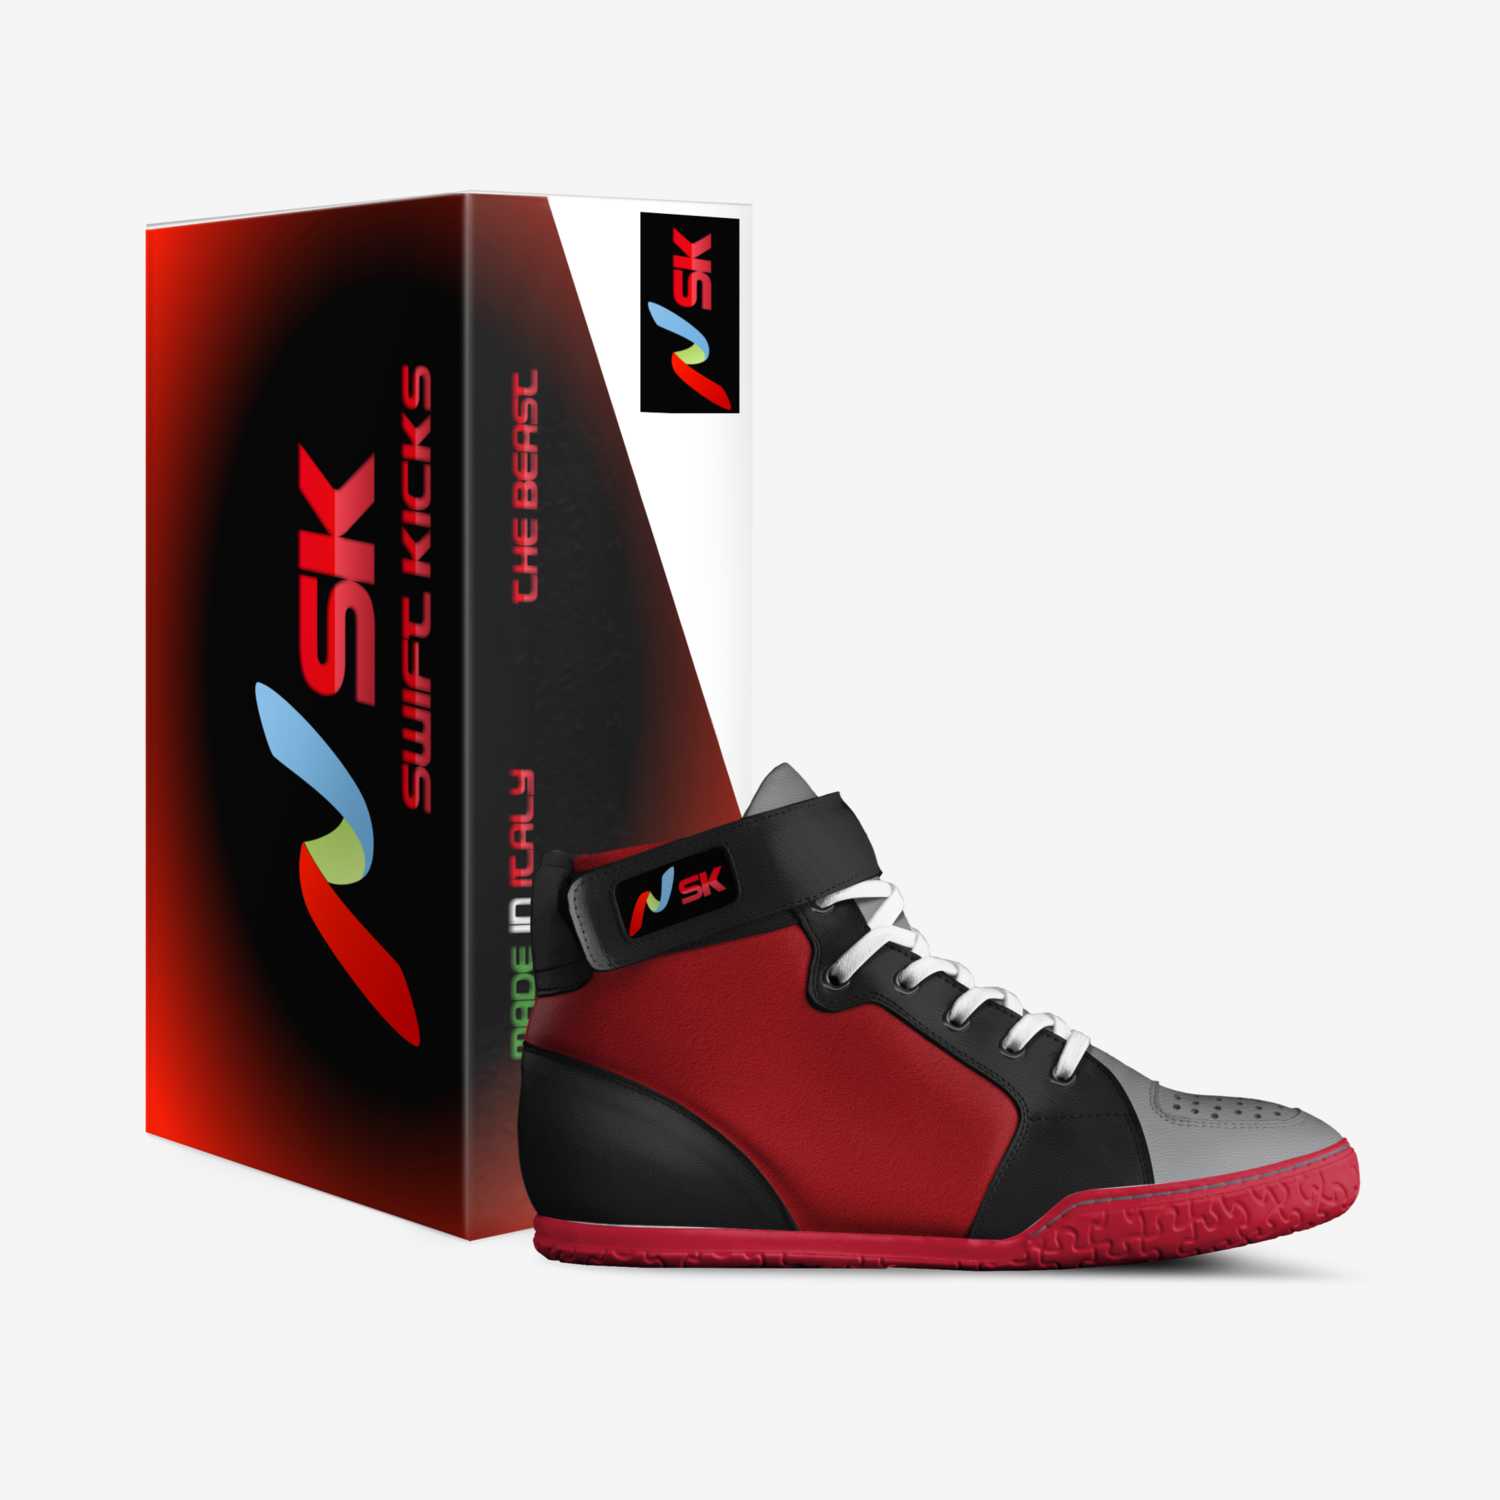 Swift Kicks custom made in Italy shoes by Ram Persaud | Box view